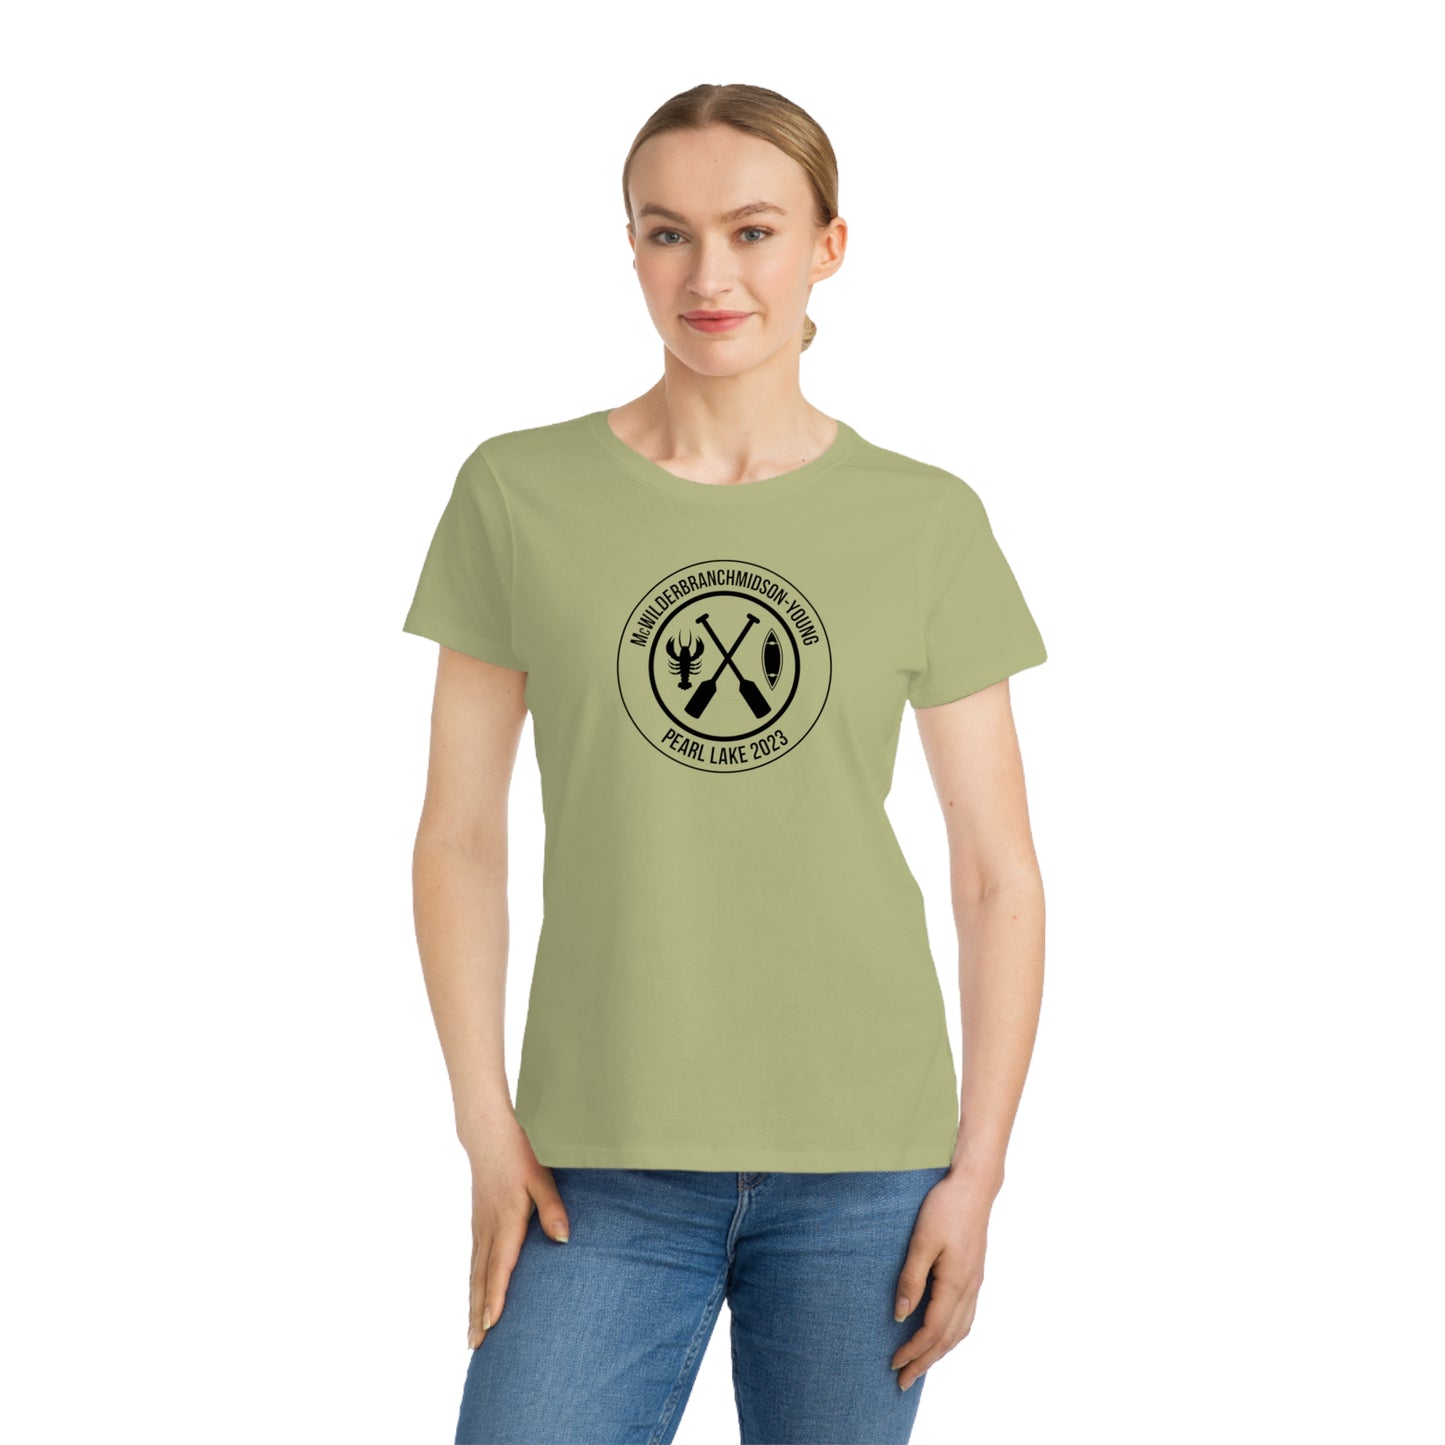 Pearl Lake Women's Organic T-Shirt (Light)